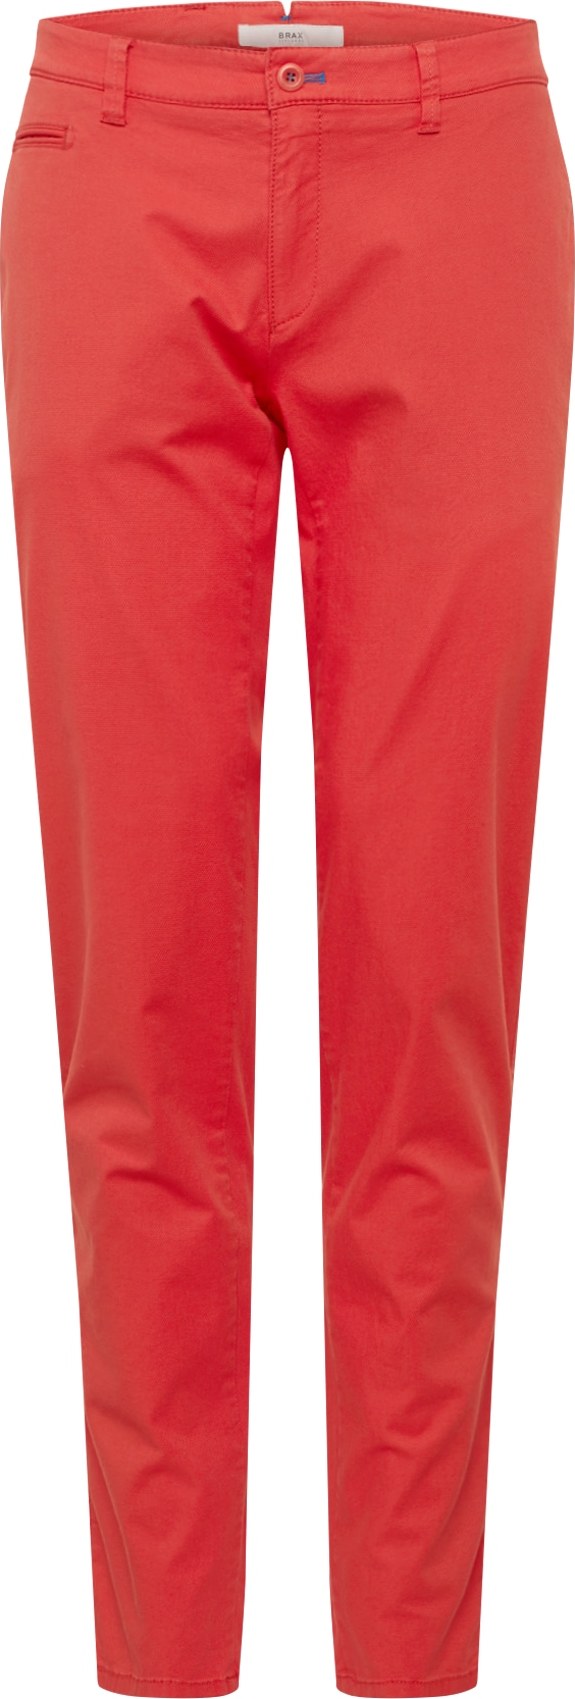 BRAX Chino kalhoty 'Fabio In' červená